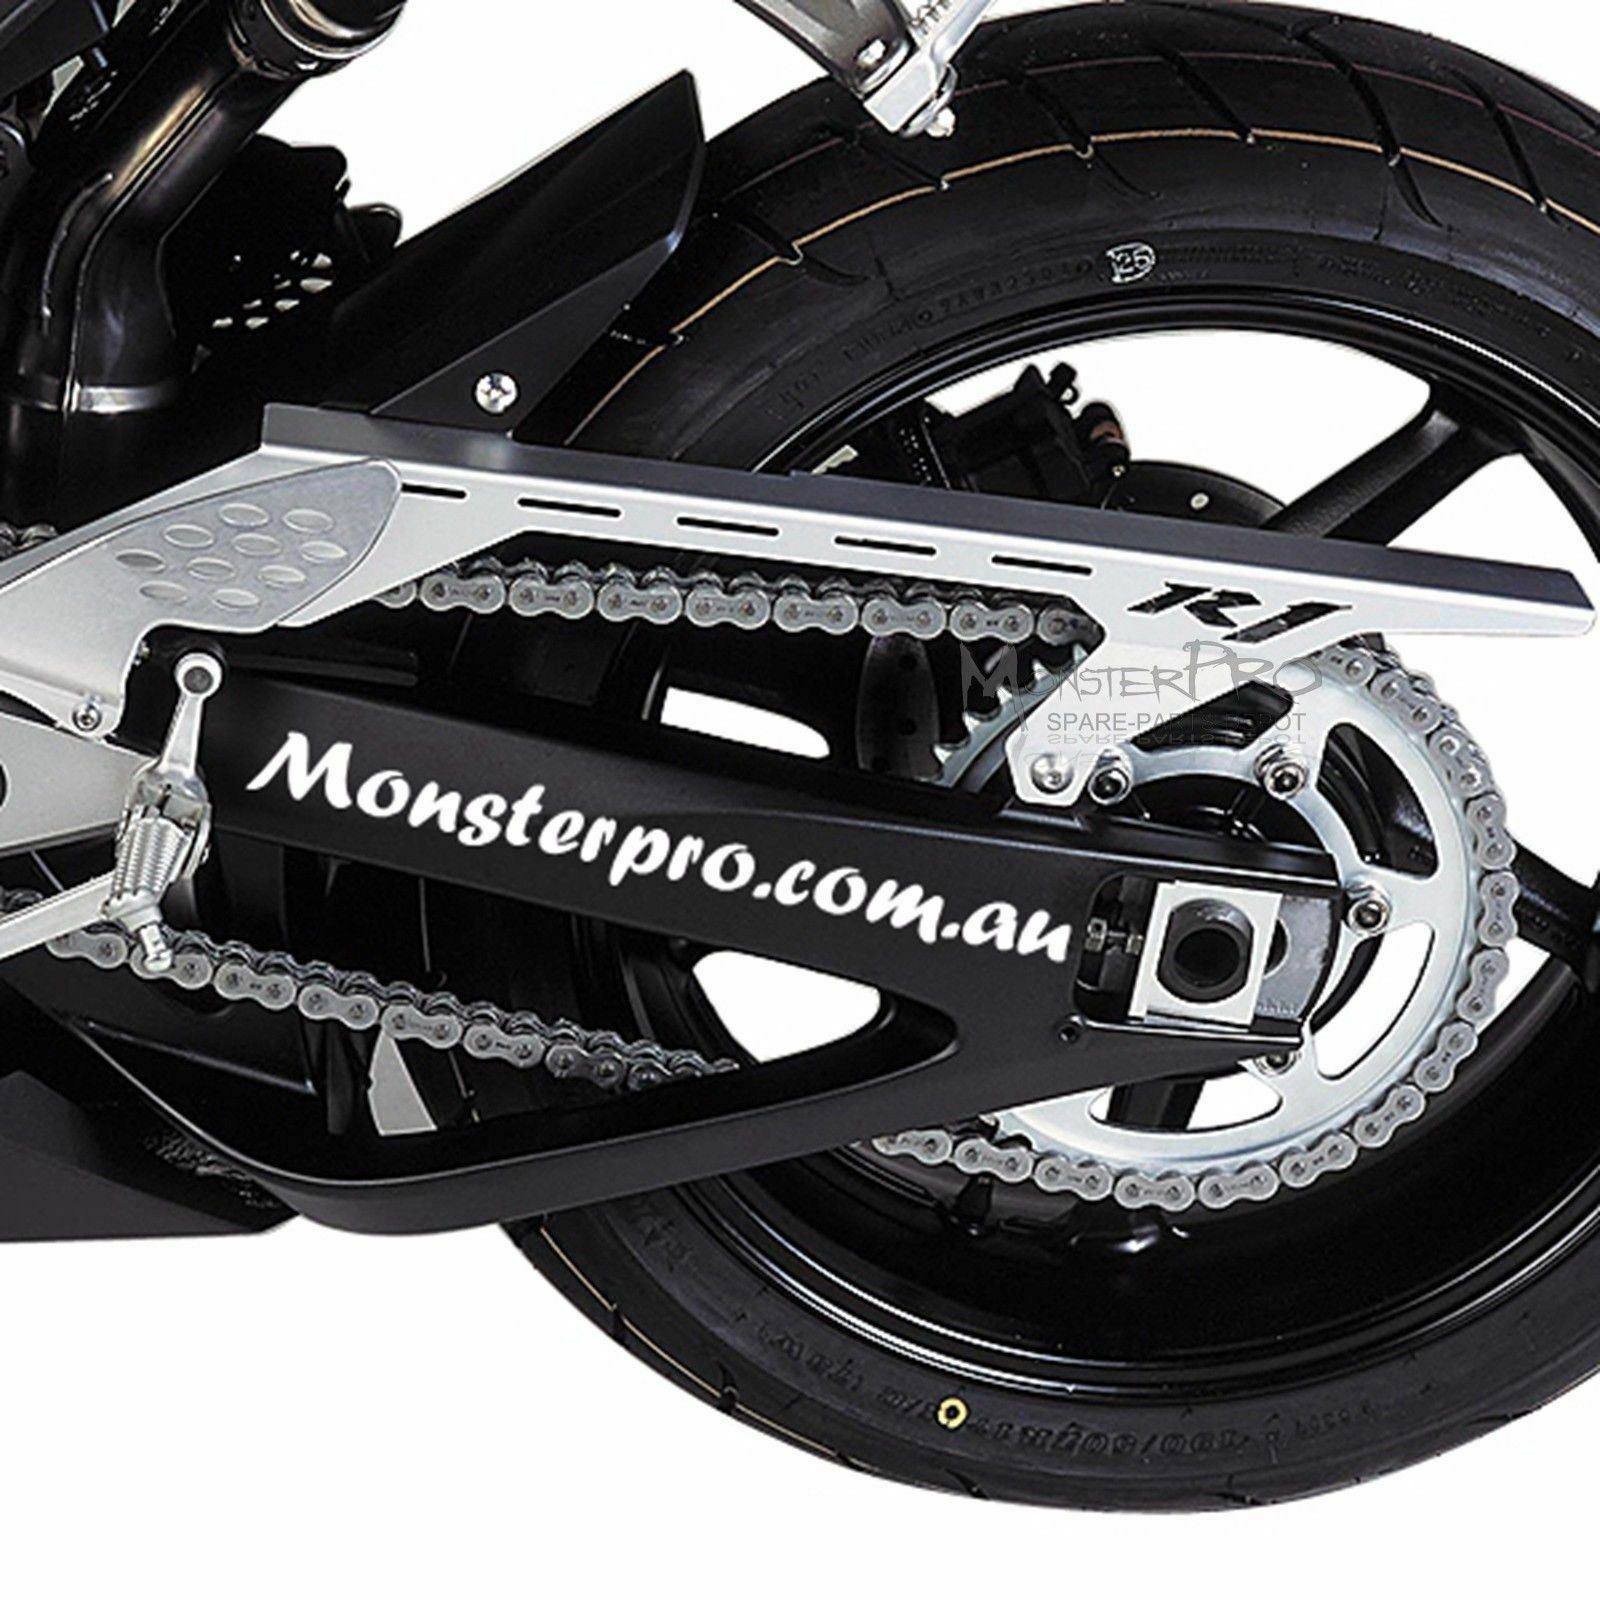 Motorcycle 428 108L Chain For 90-125 cc Honda 80-230cc Yamaha 70-125 cc Suzuki - TDRMOTO